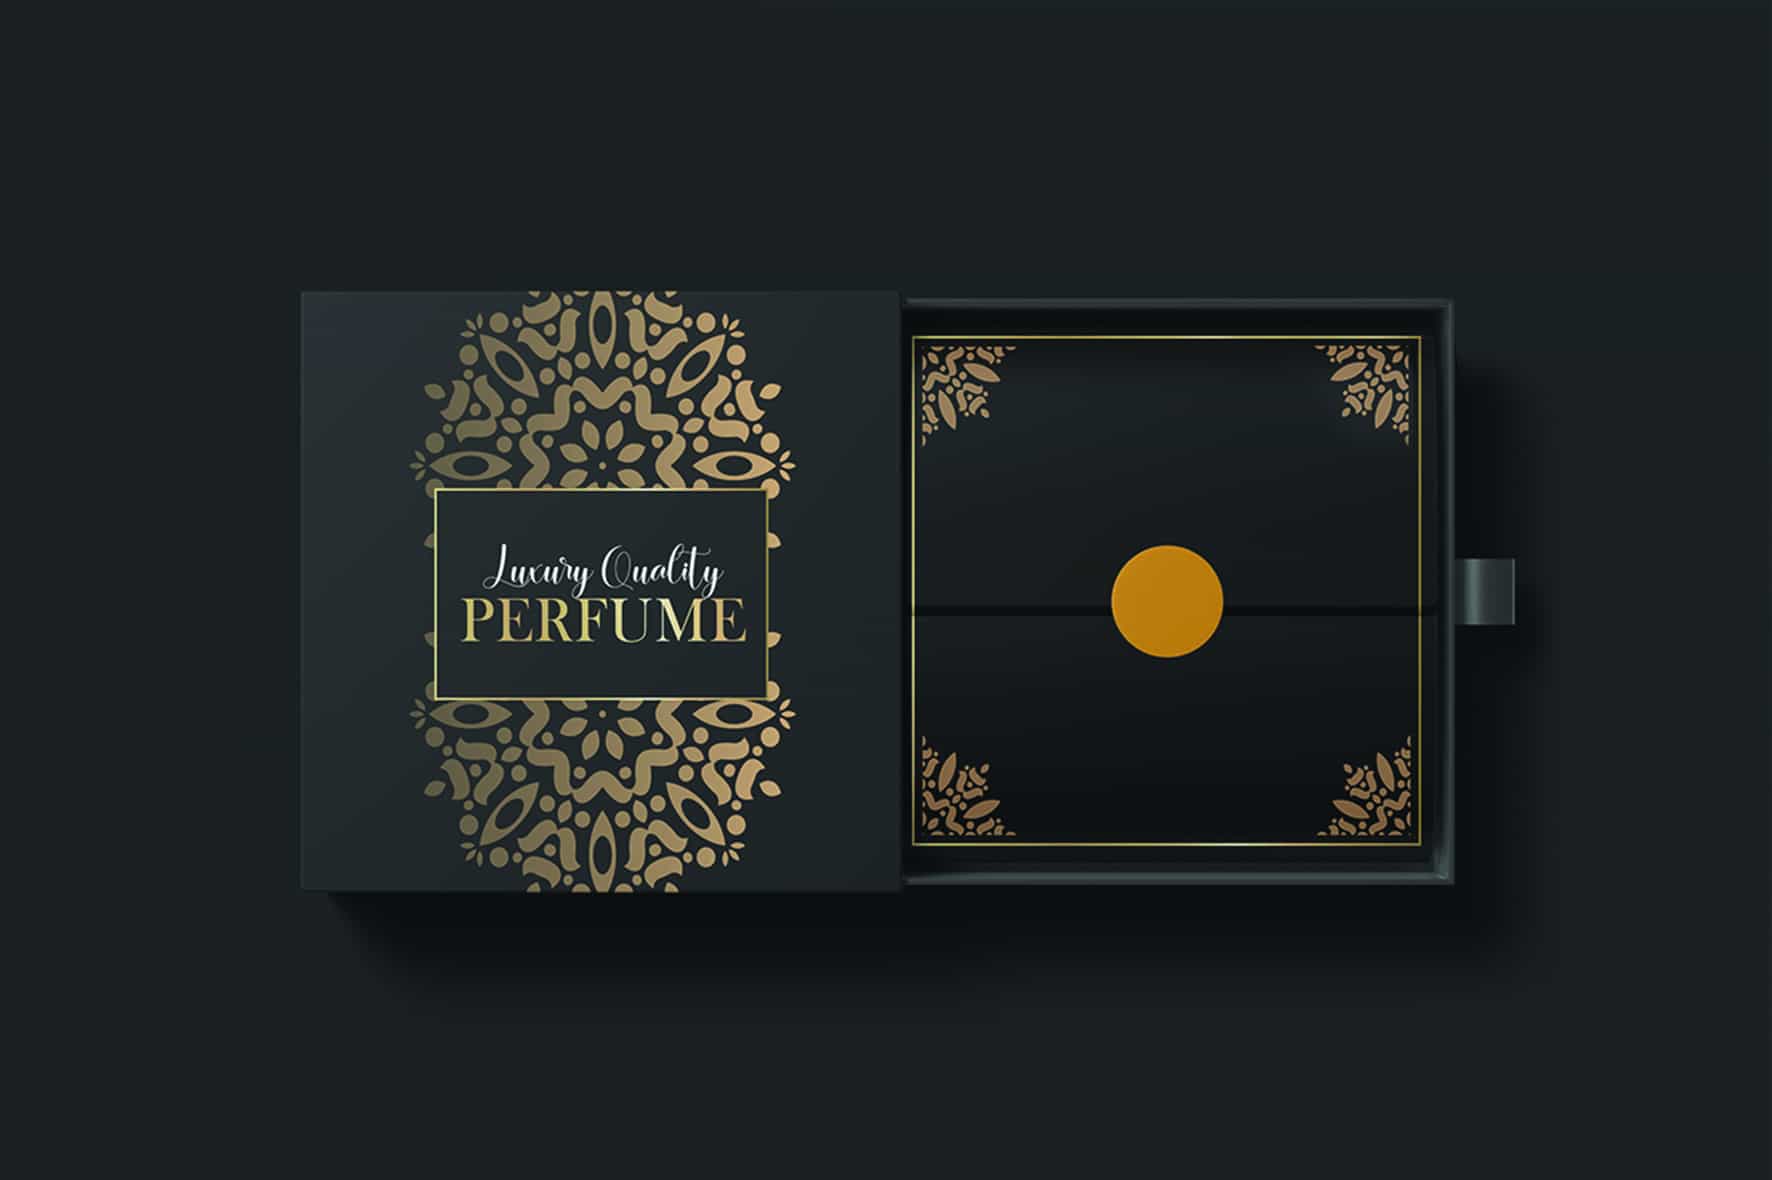 Perfume Box